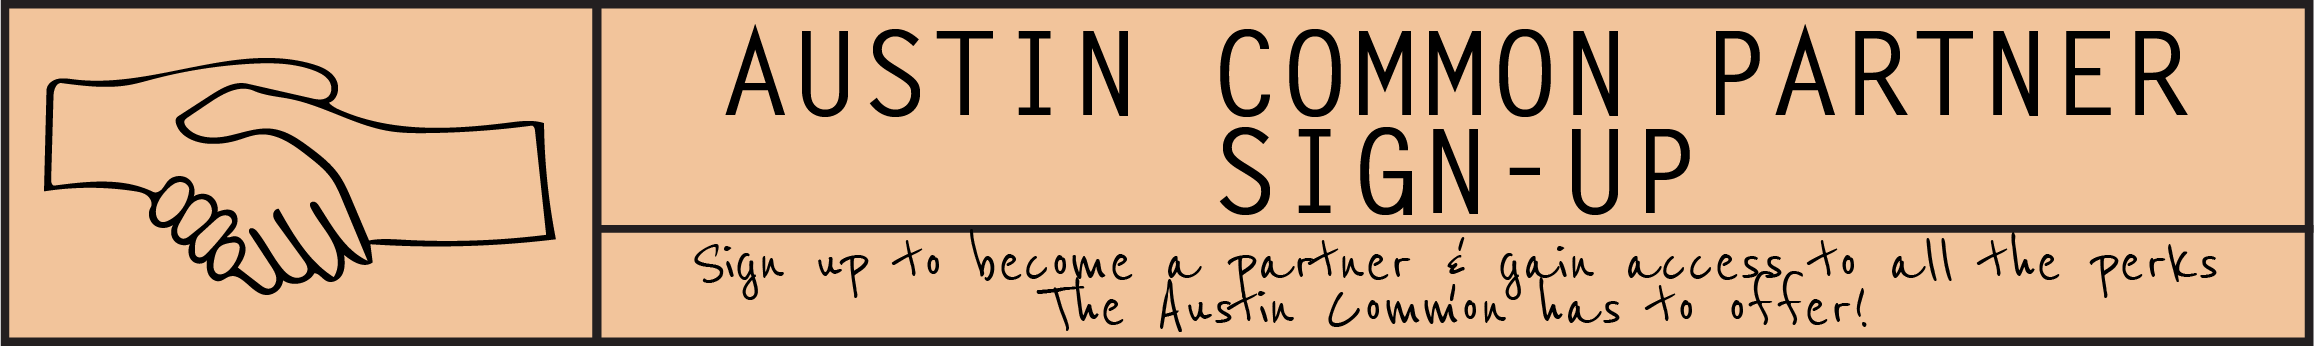 Austin Common Partner Signup - Header